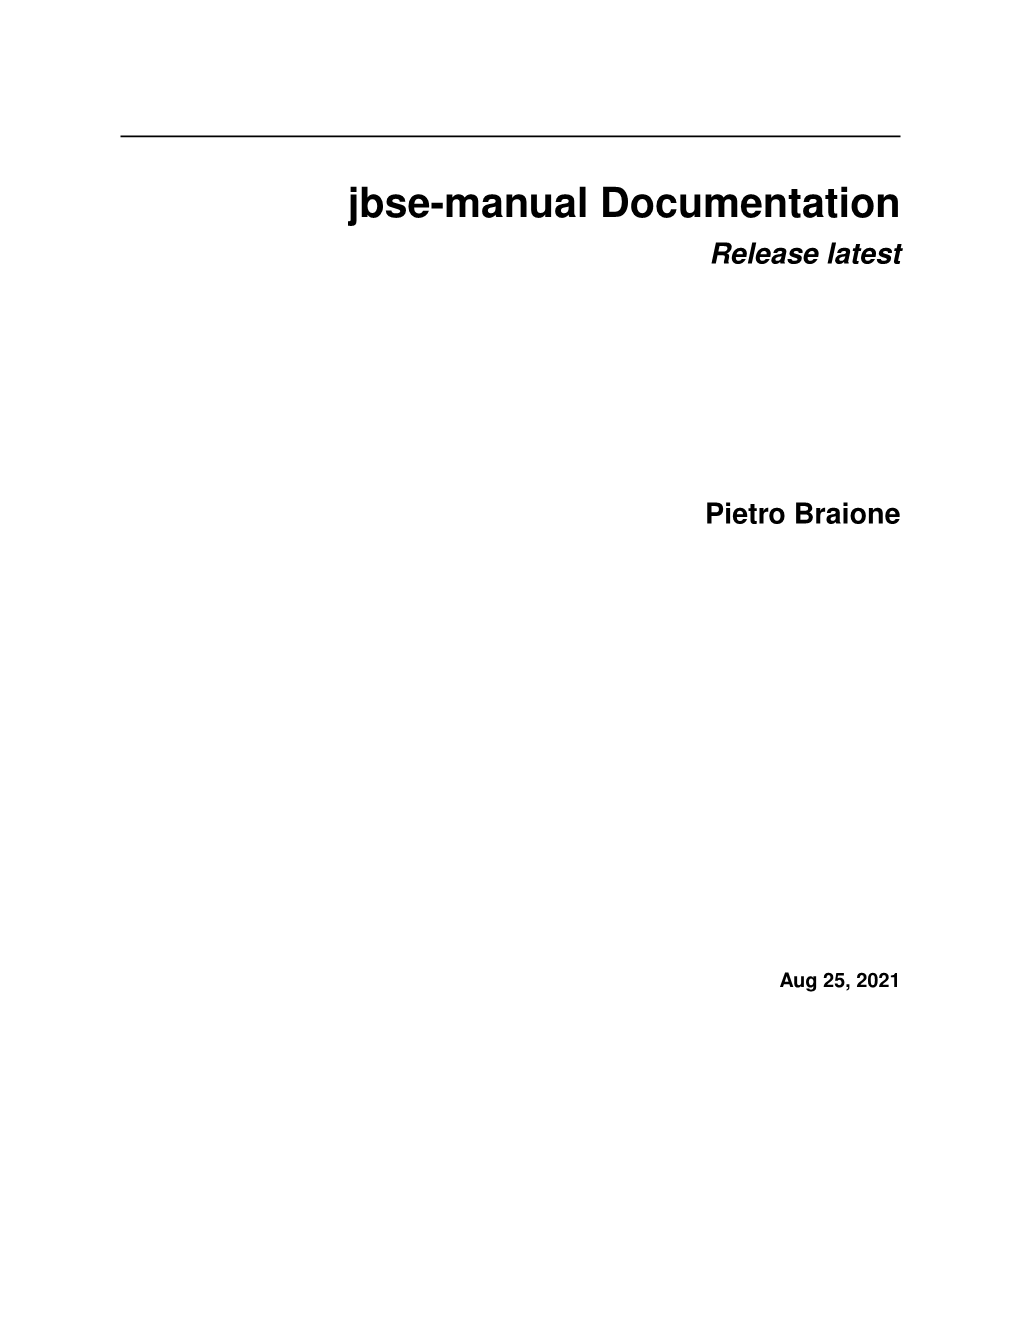 Jbse-Manual Documentation Release Latest